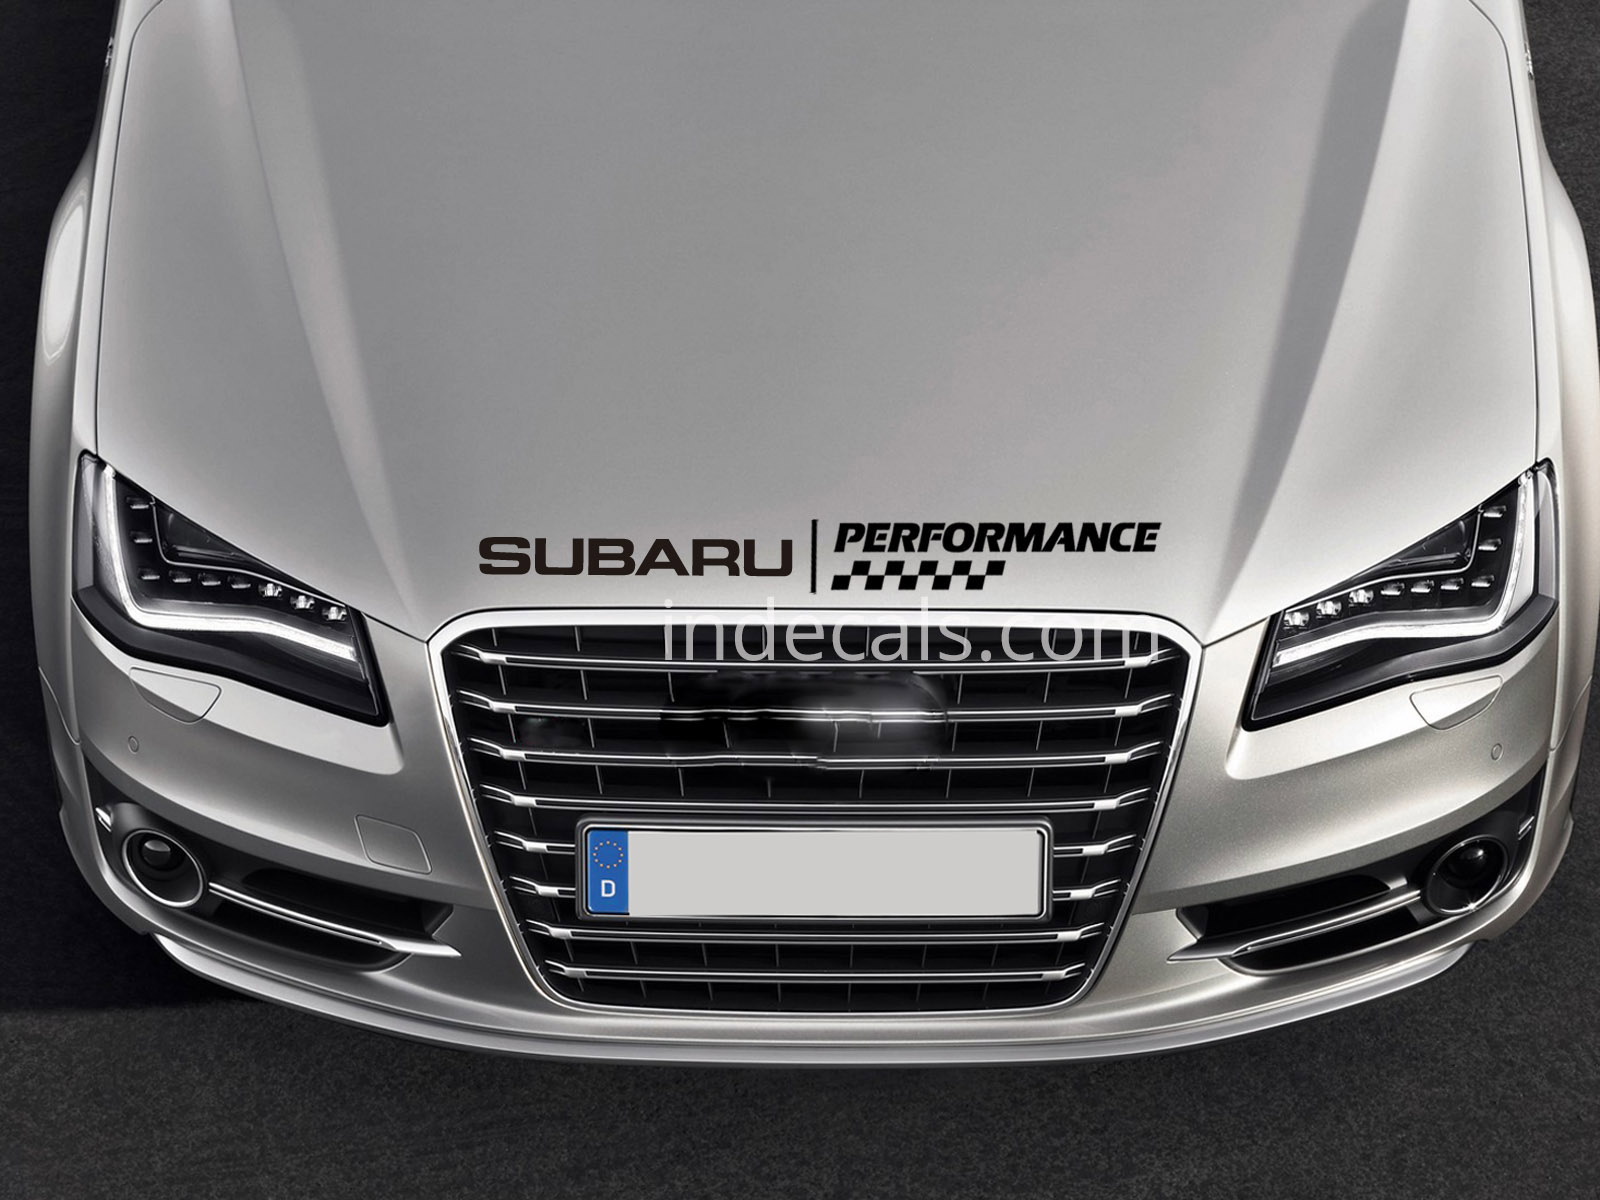 1 x Subaru Performance Sticker for Bonnet - Black